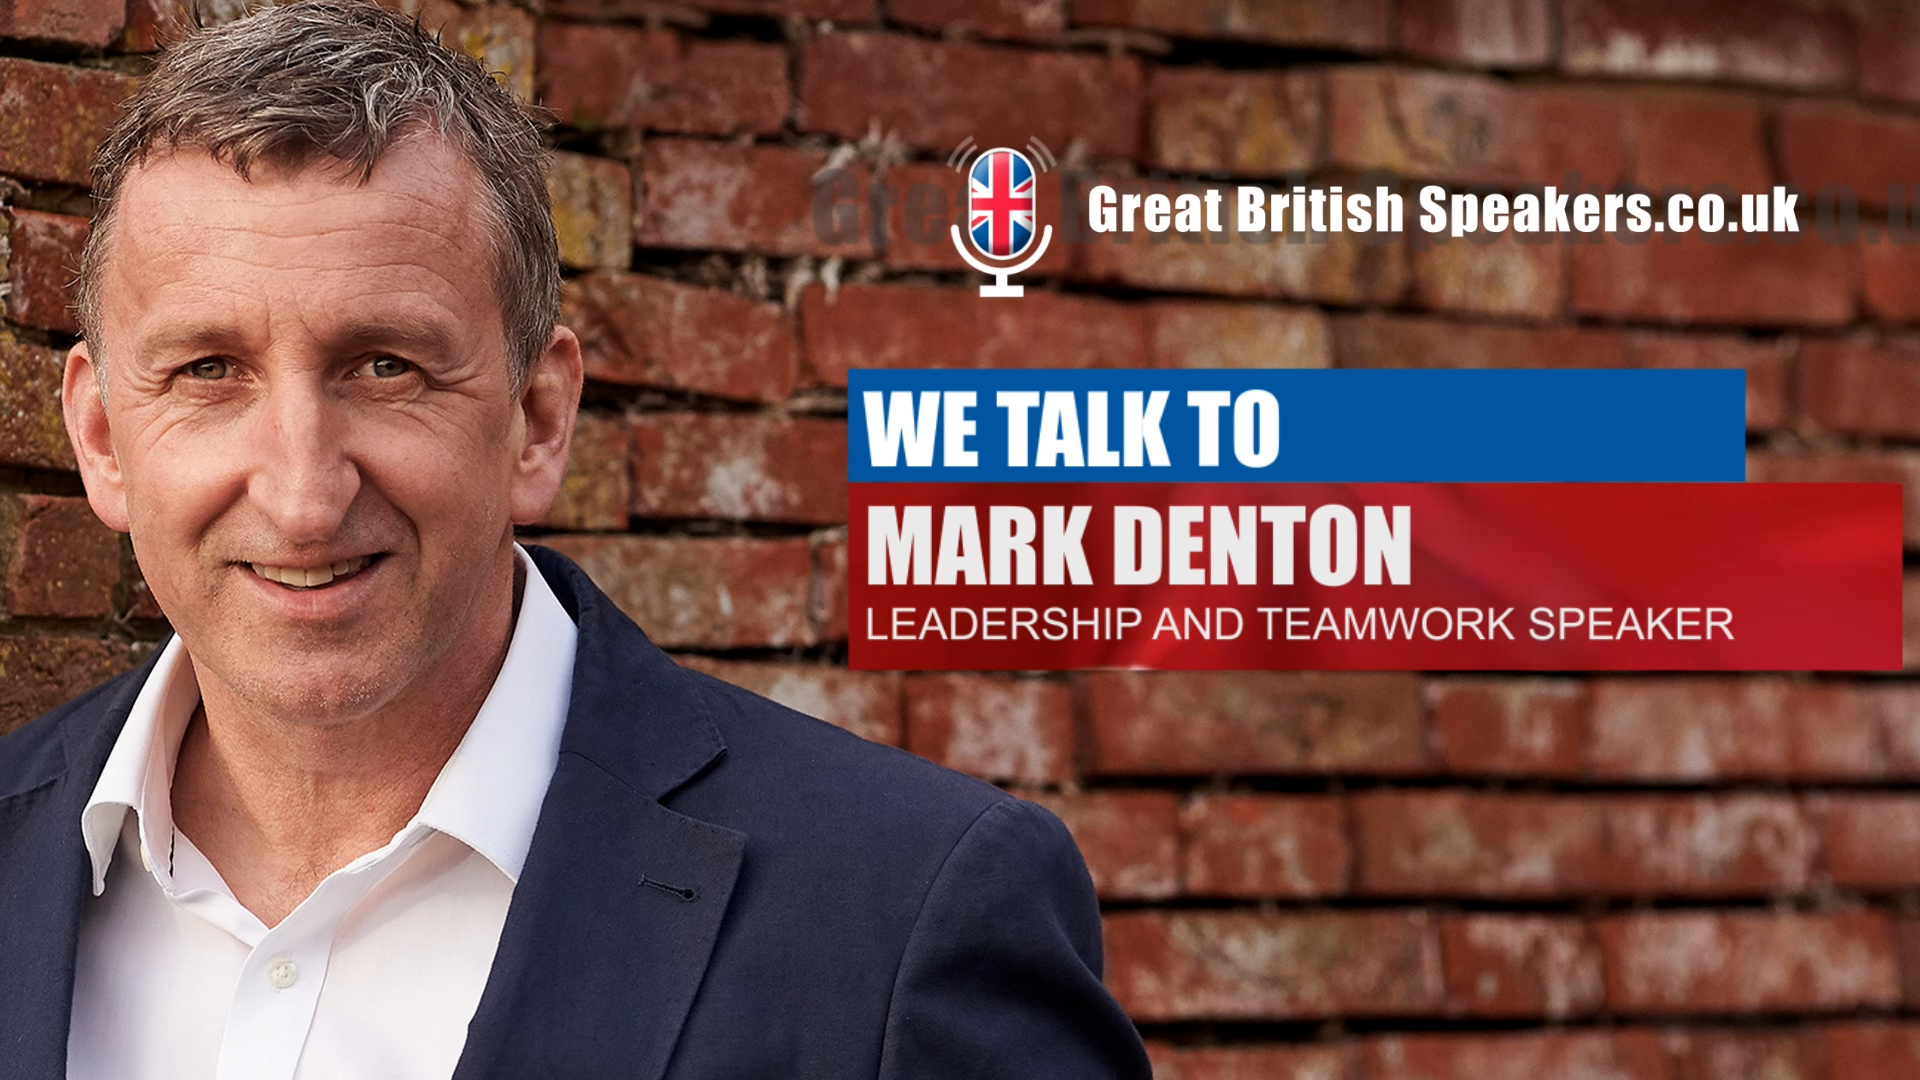 Mark Denton, motivational speaker at Great British Speakers